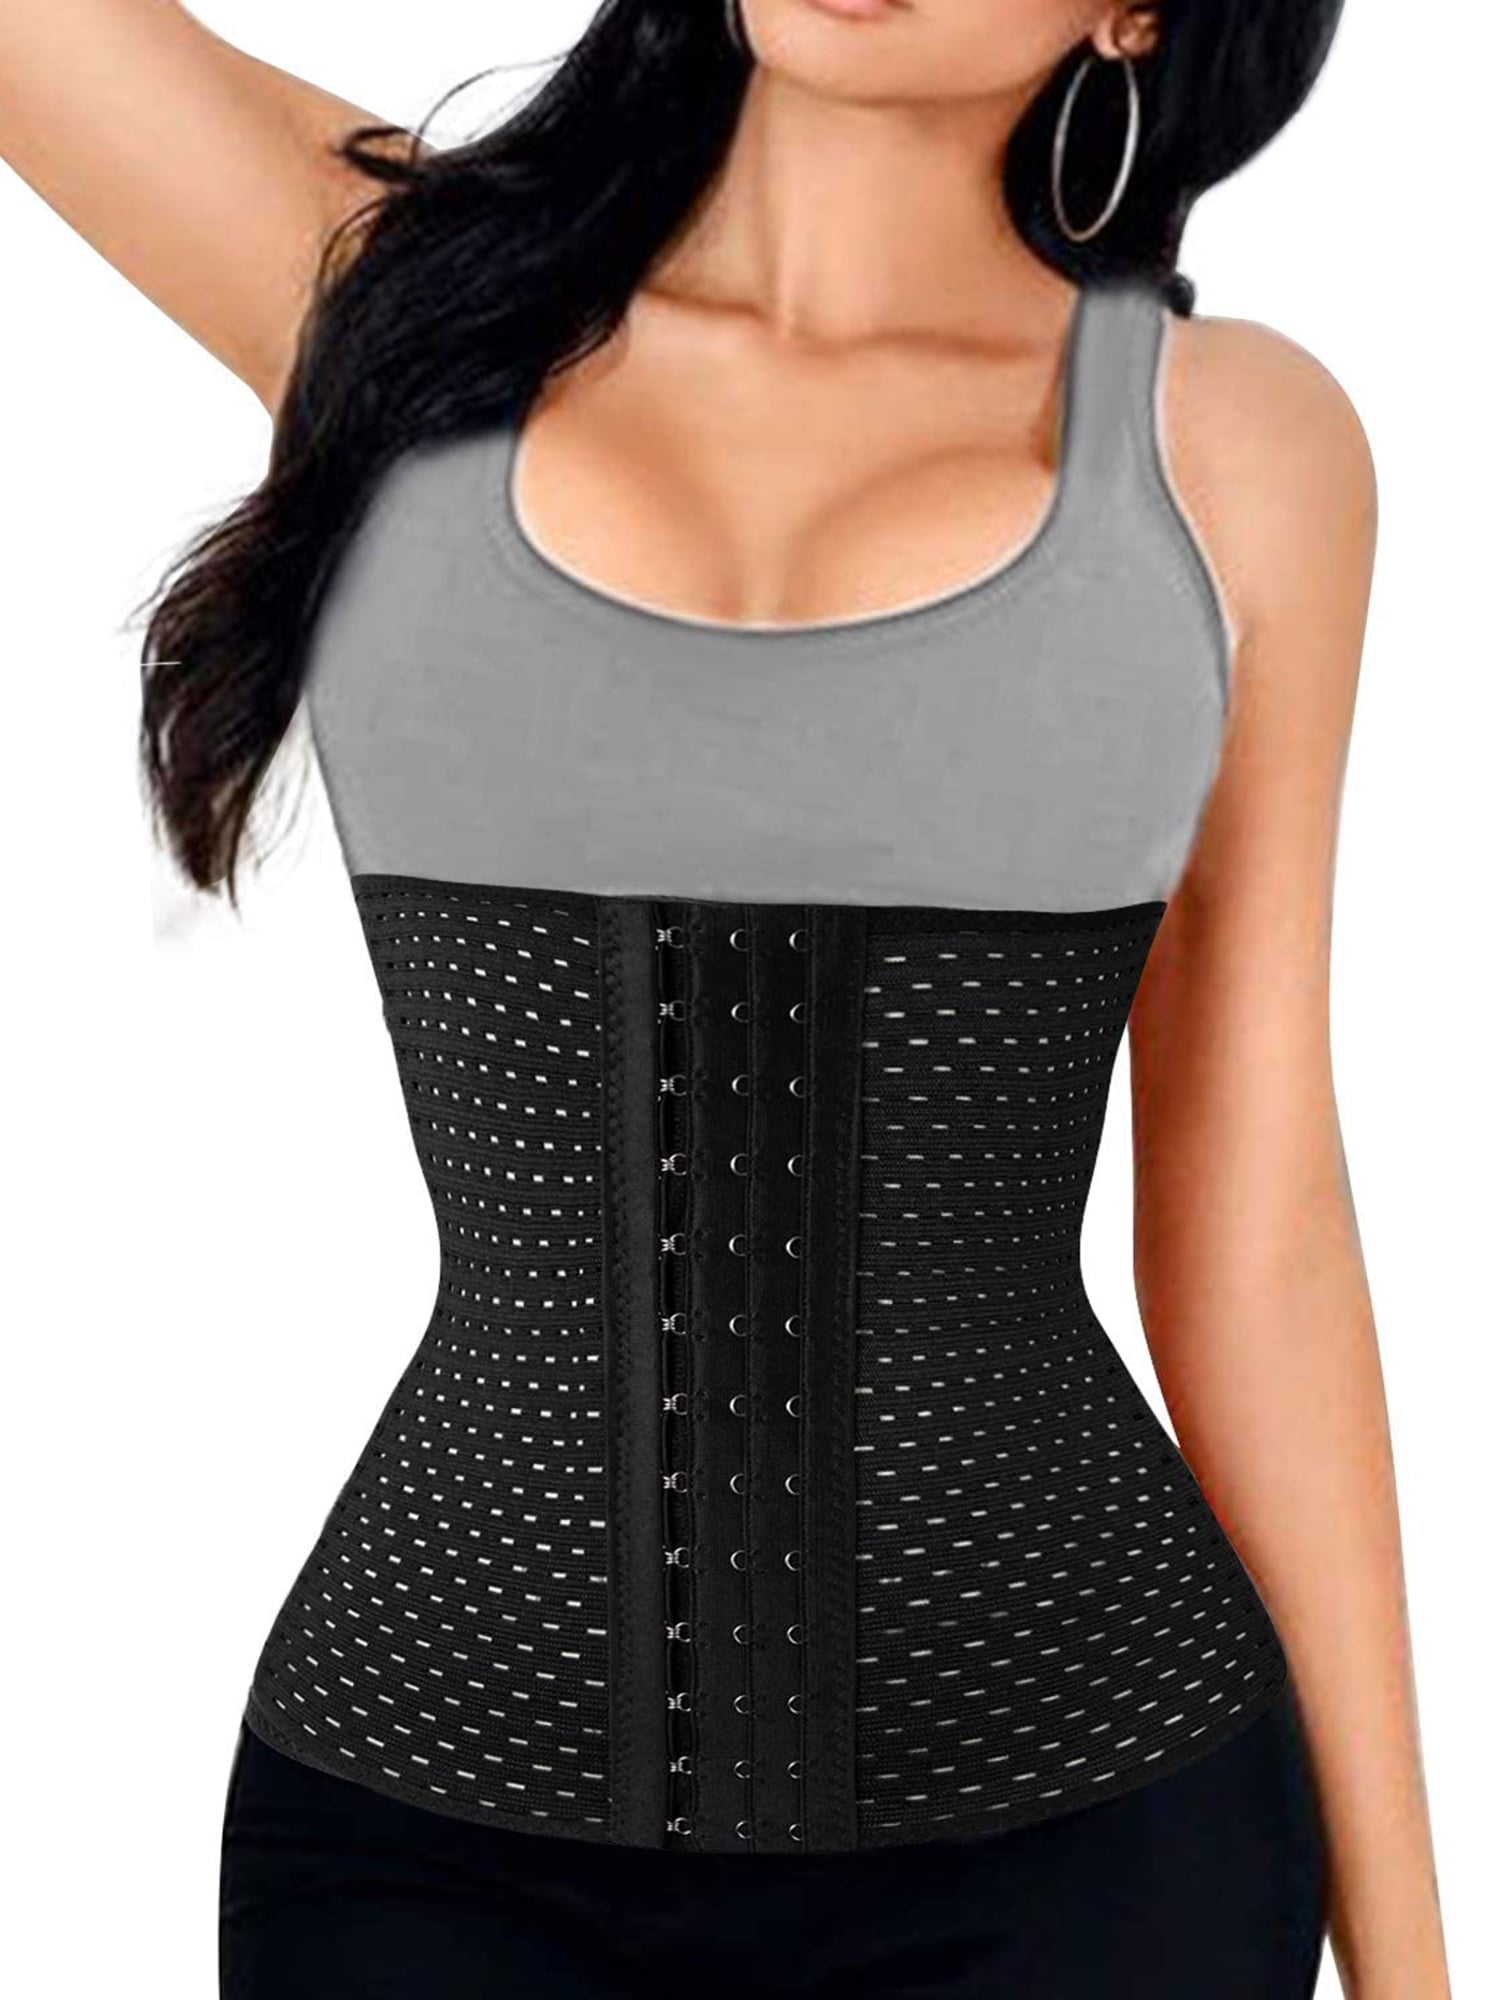 Ursexyly Adjustable Shoulder Strap Waist Trainer Vest with Steel Bones Firm 